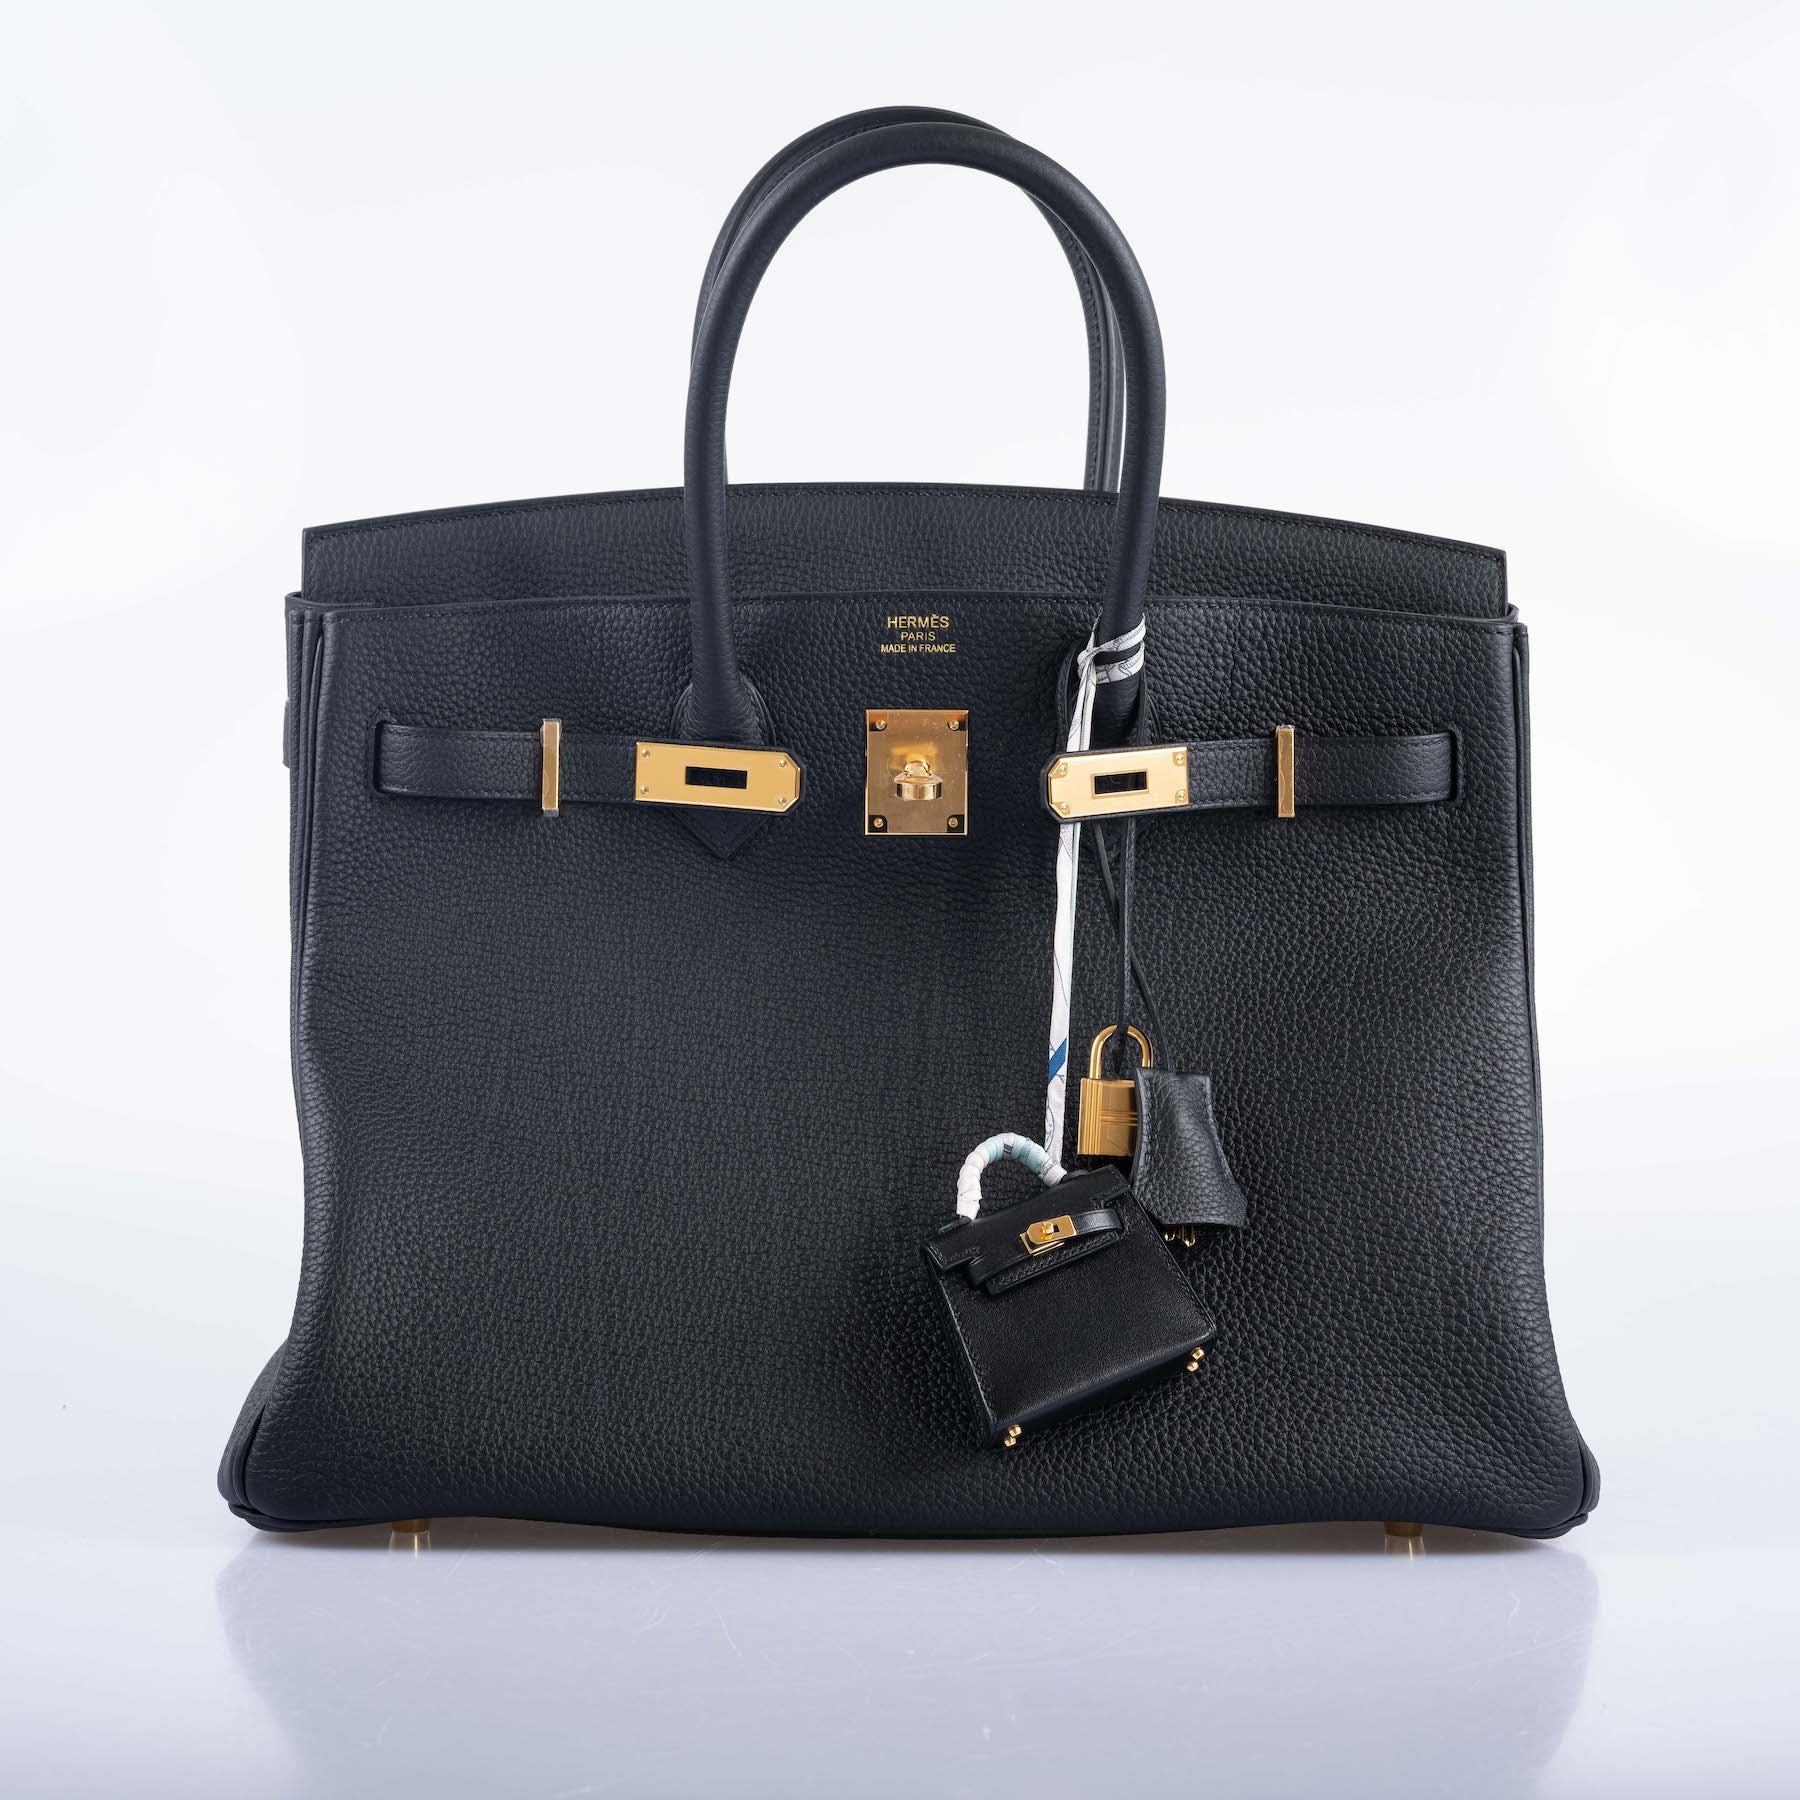 Hermès Birkin 35 Black Togo Gold Hardware